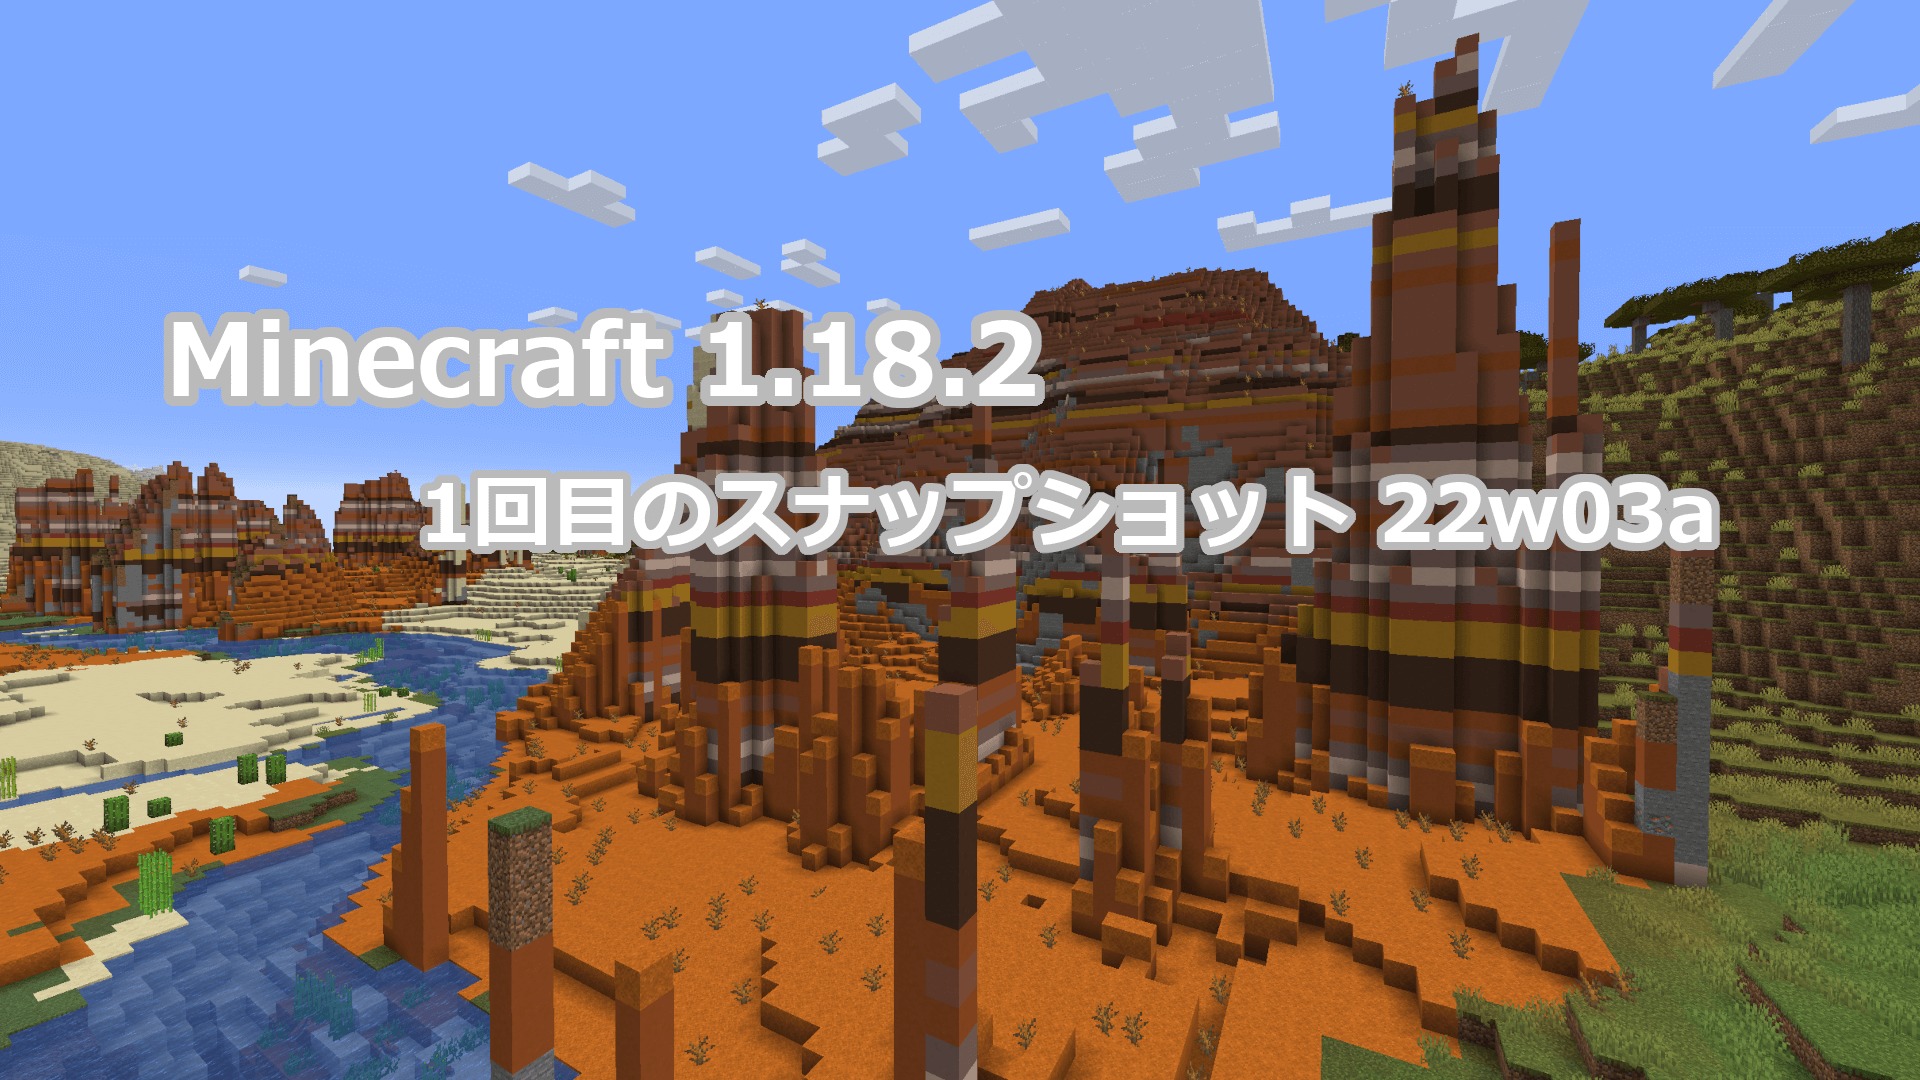 Minecraft 1.18.2 1回目のスナップショット22w03aリリース情報｜新しいコマンド追加とバグ修正